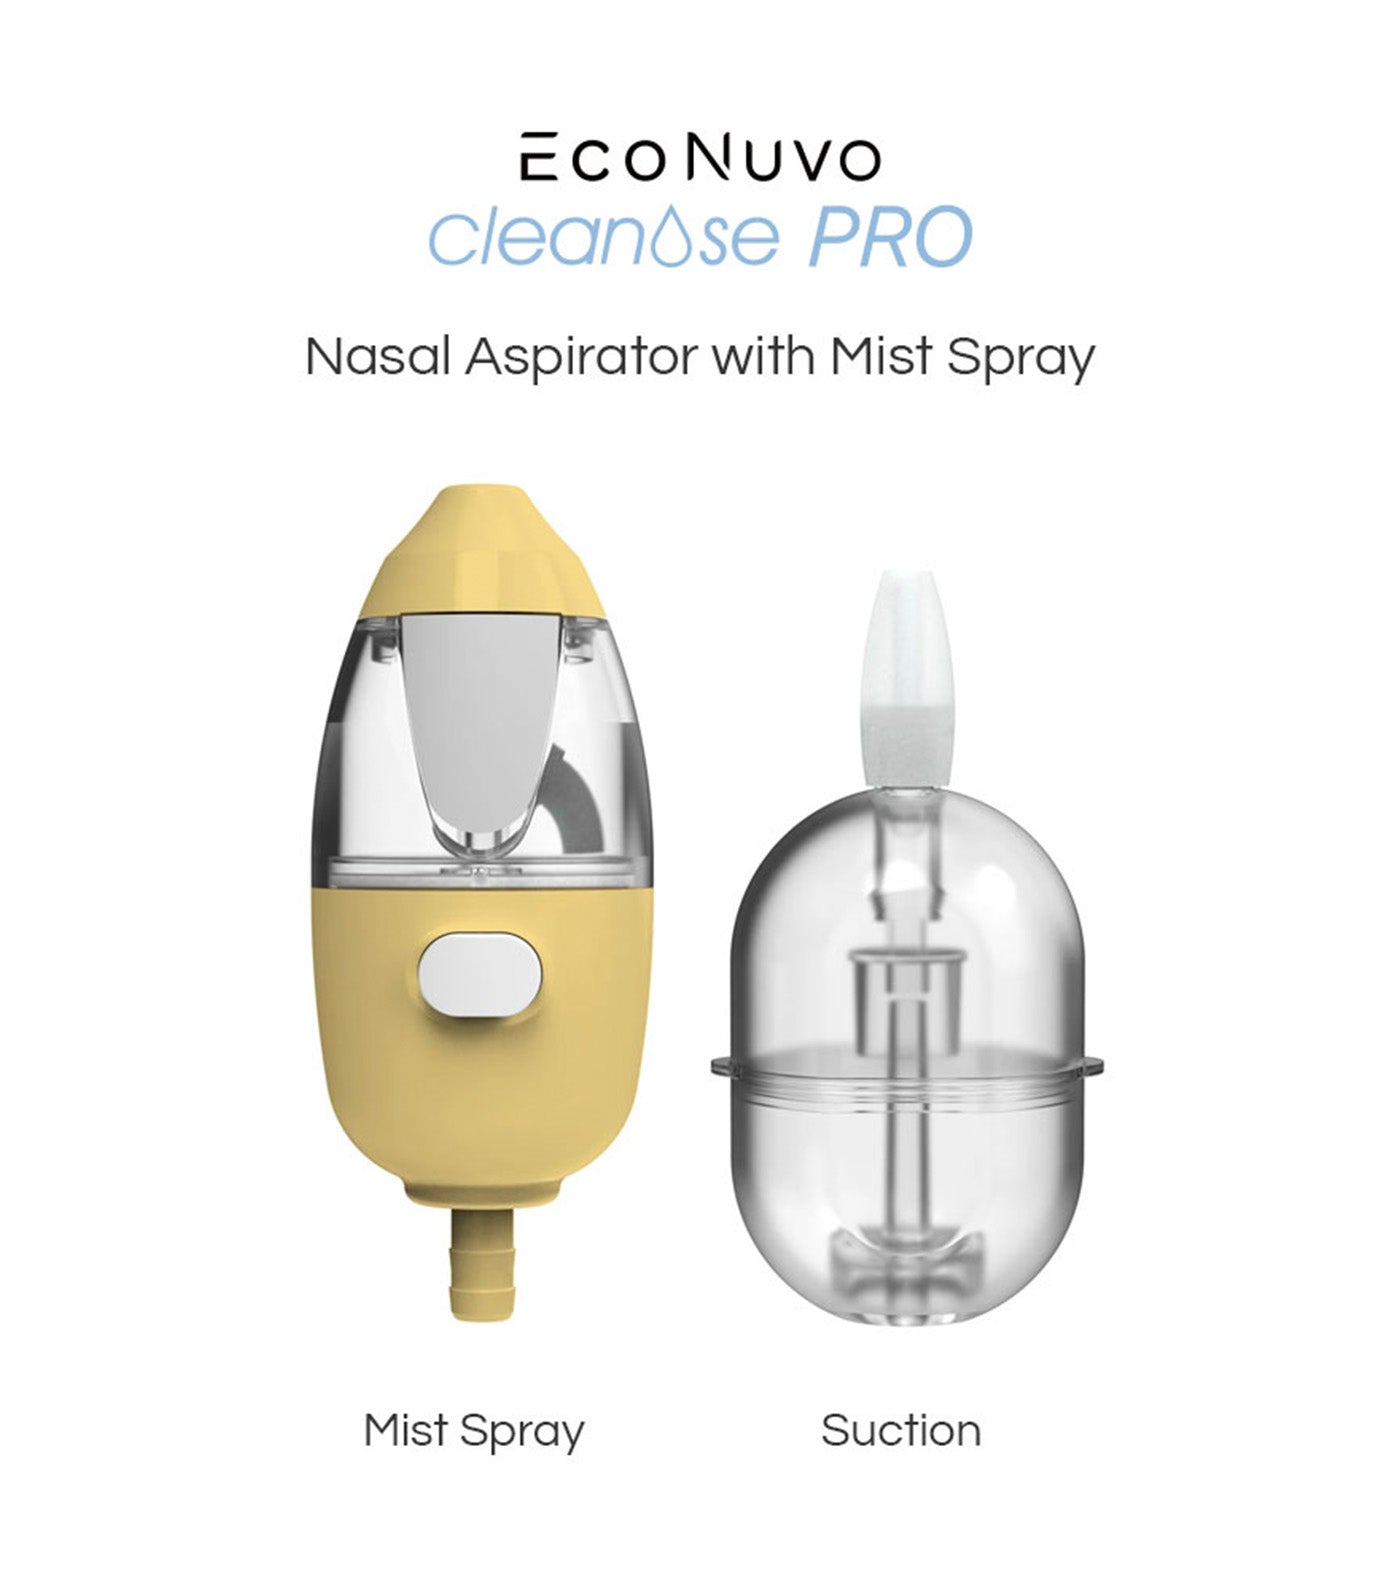 Cleanose Pro Electric Nasal Aspirator